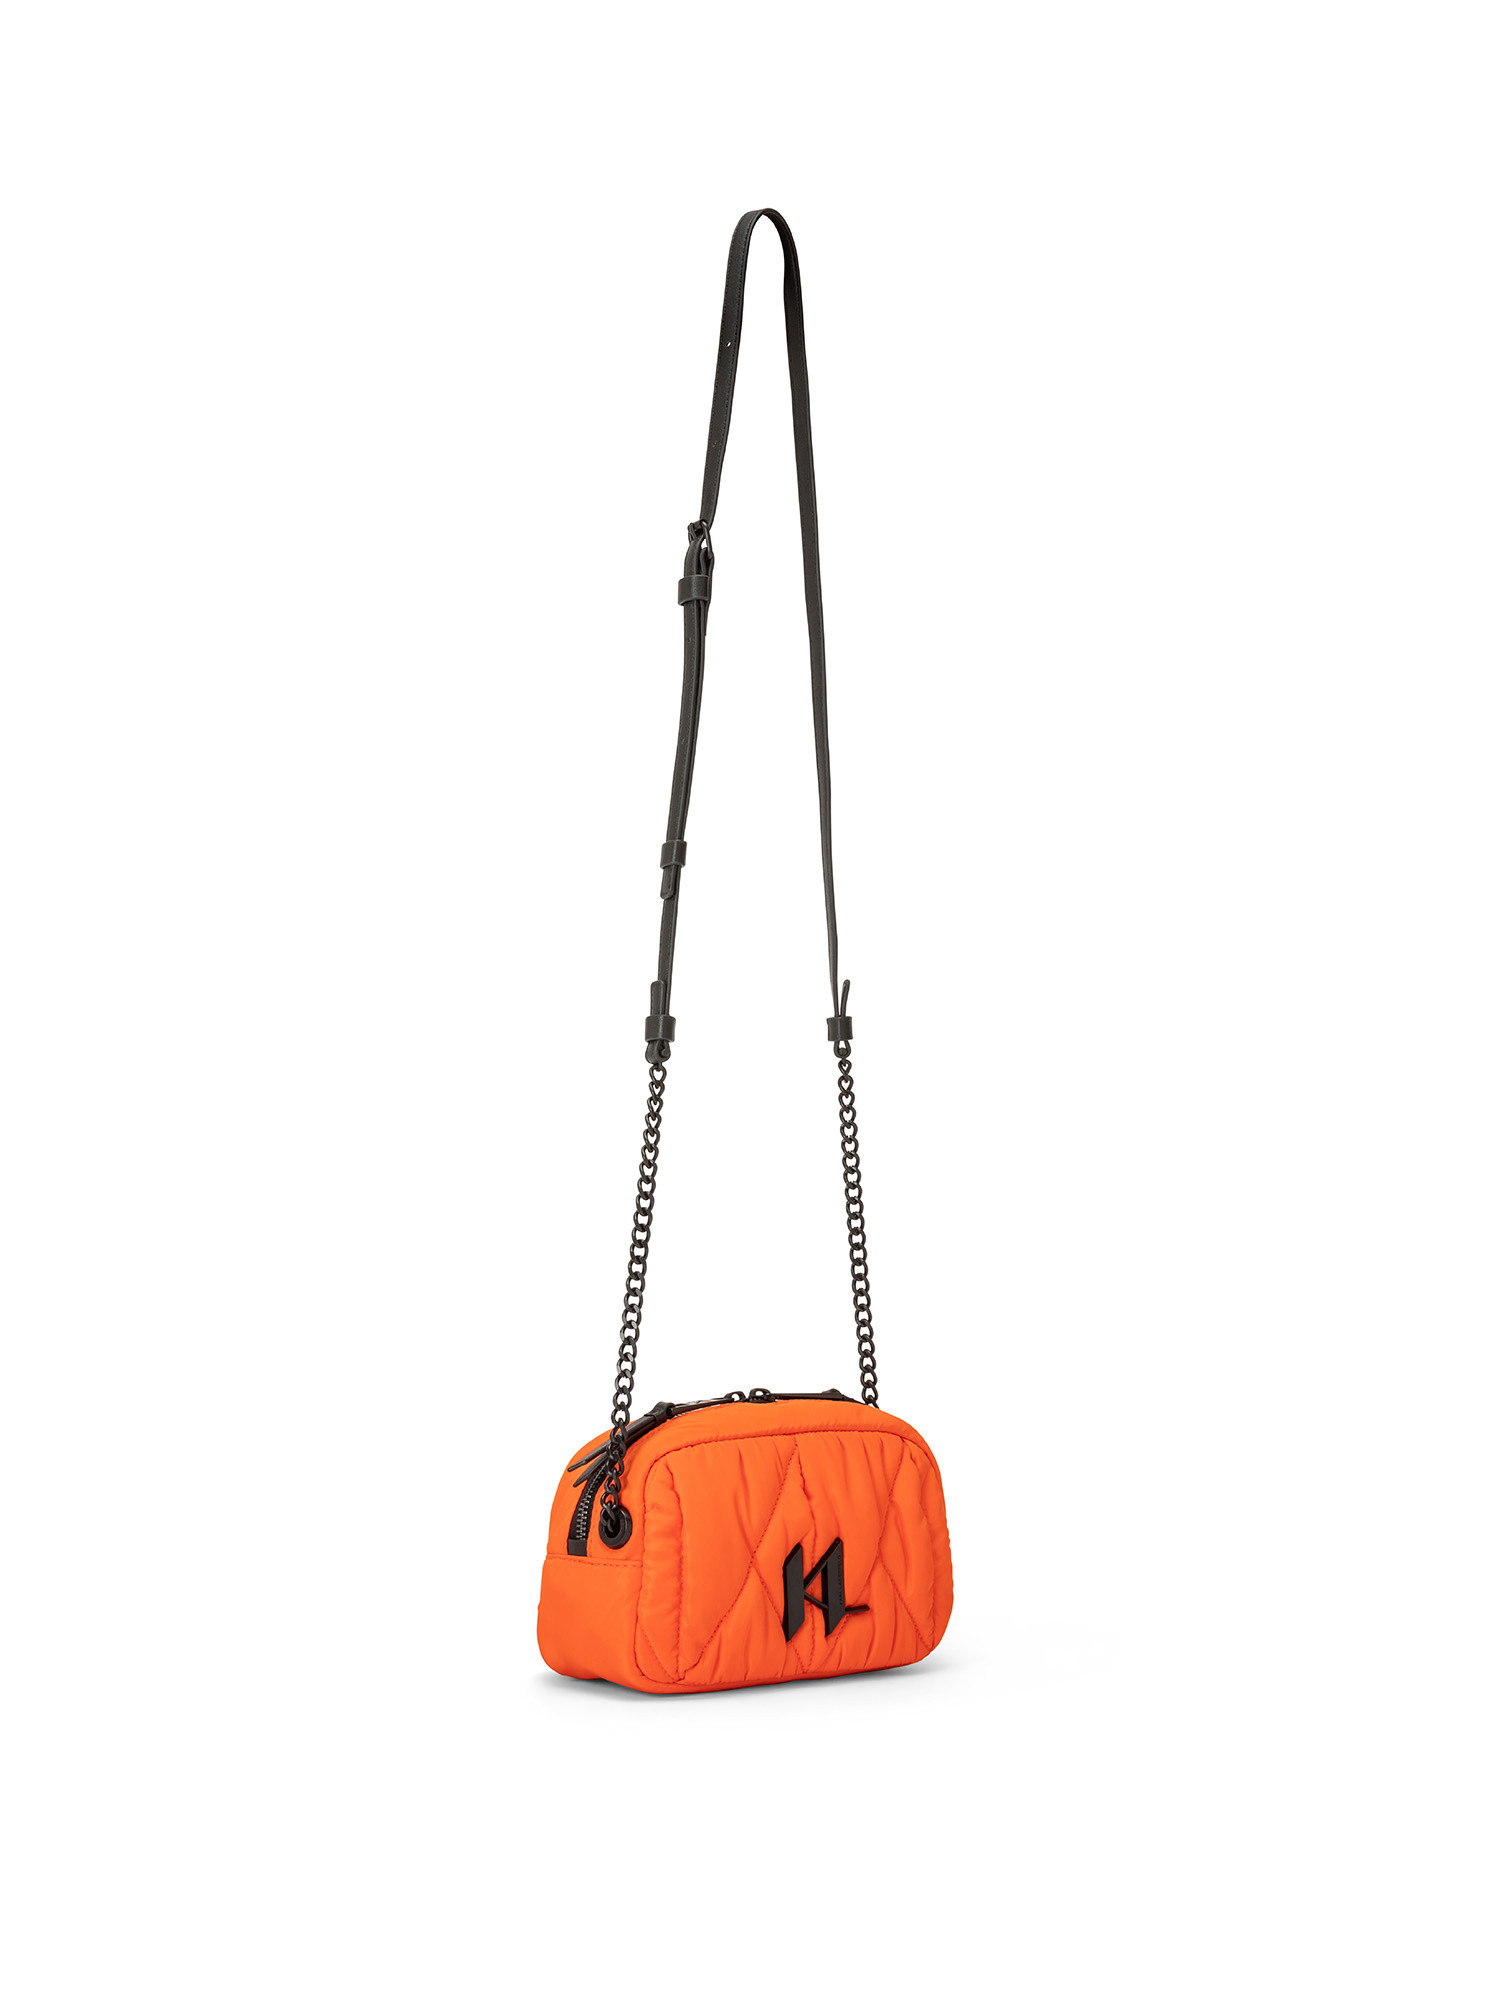 Karl Lagerfeld - K/studio borsa a tracolla in nylon, Arancione, large image number 1